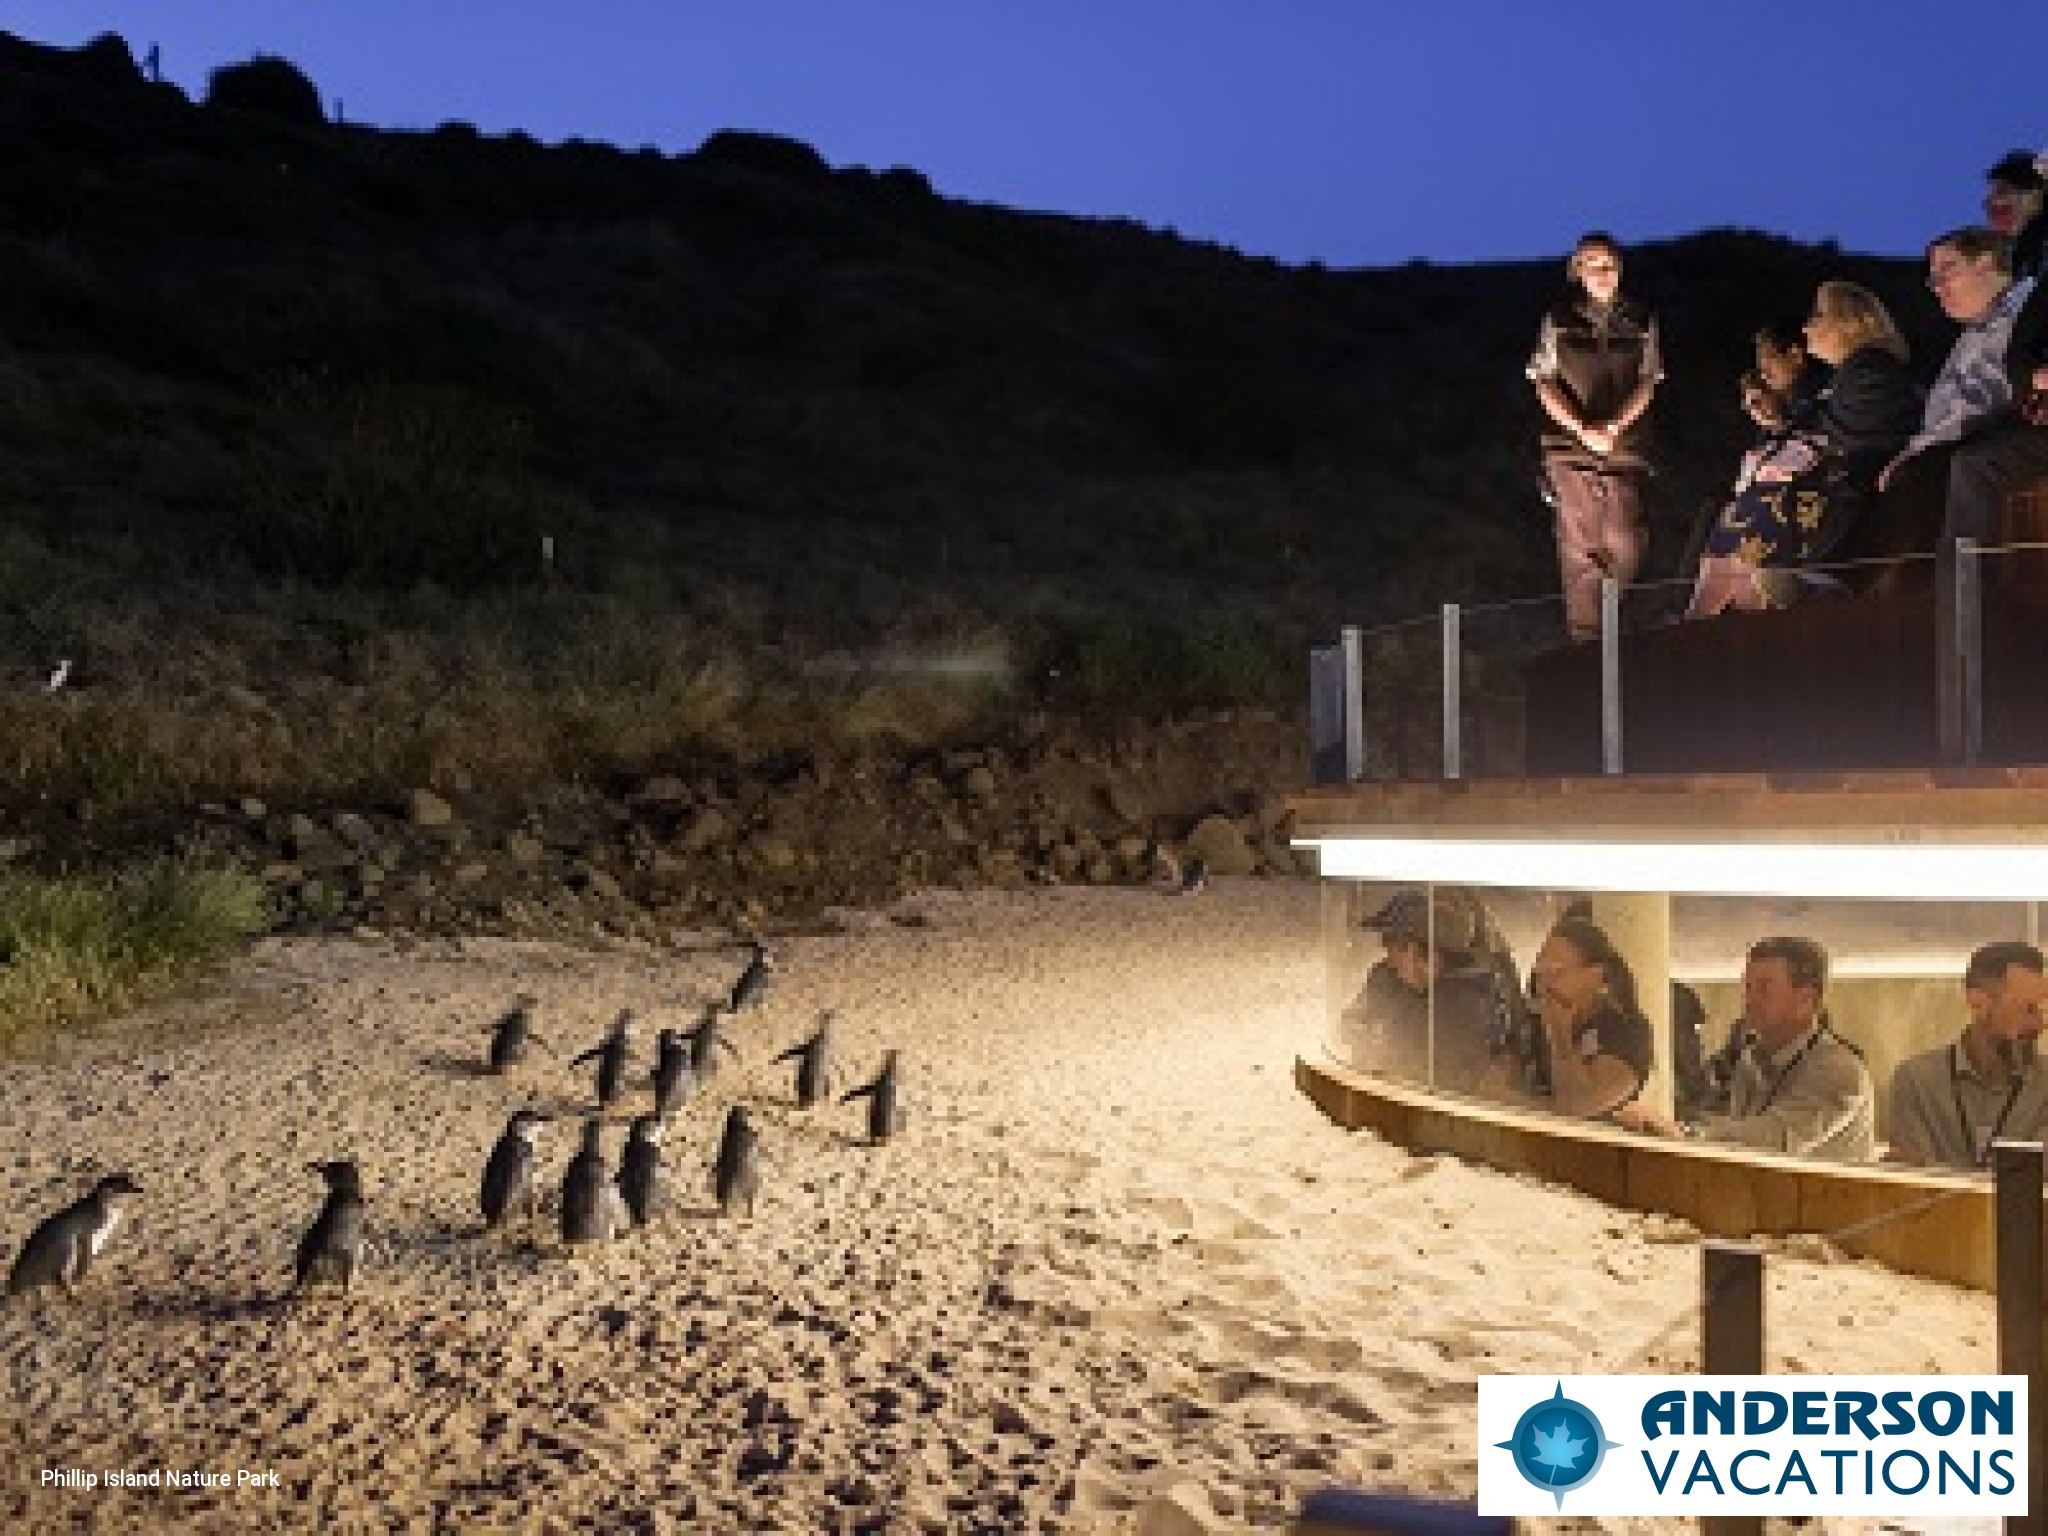 Penguin Parade - Phillip Island Nature Park - 